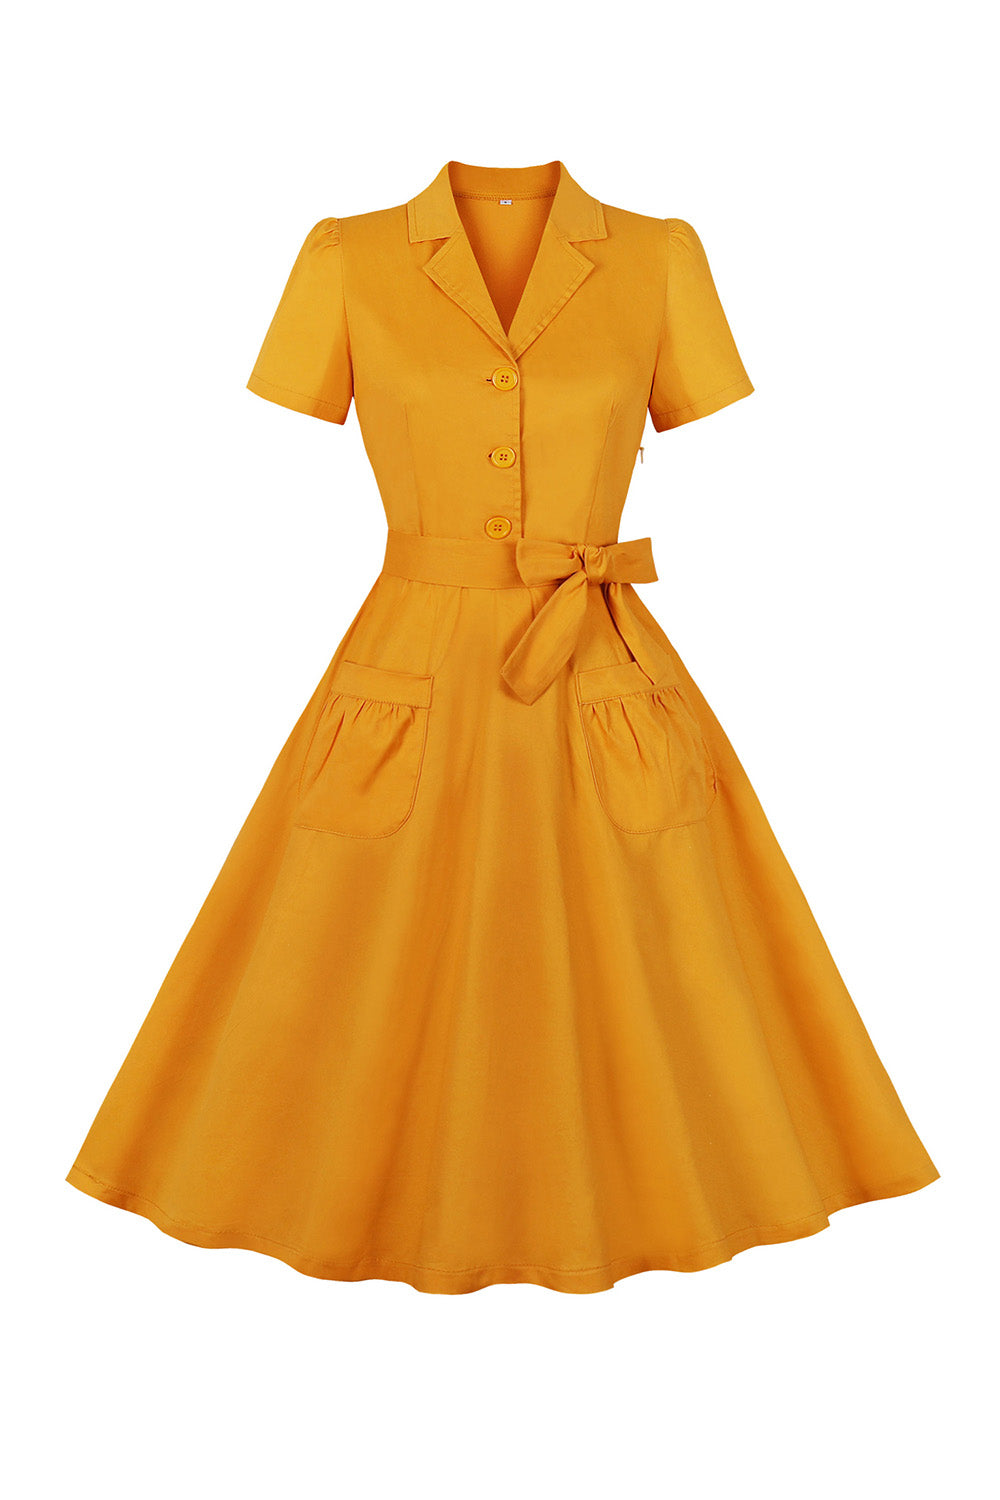 Żółta Sukienka Swing Dekolt V Vintage Z Krótkim Rękawem